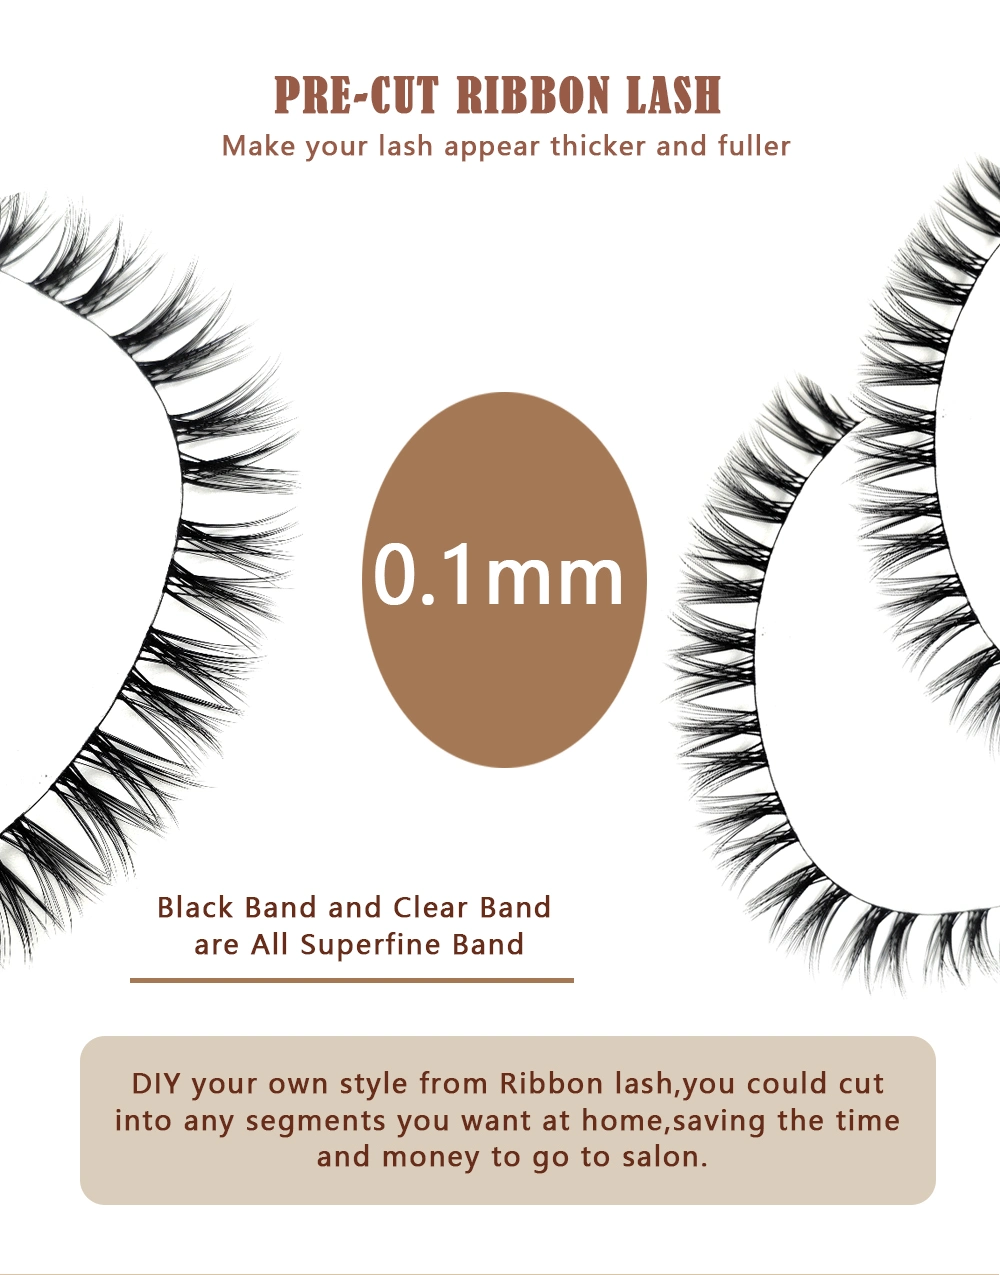 Wholesale Private label Vegan DIY Cut Cluster Lashes Black Band Faux Mink Segment Eyelashes